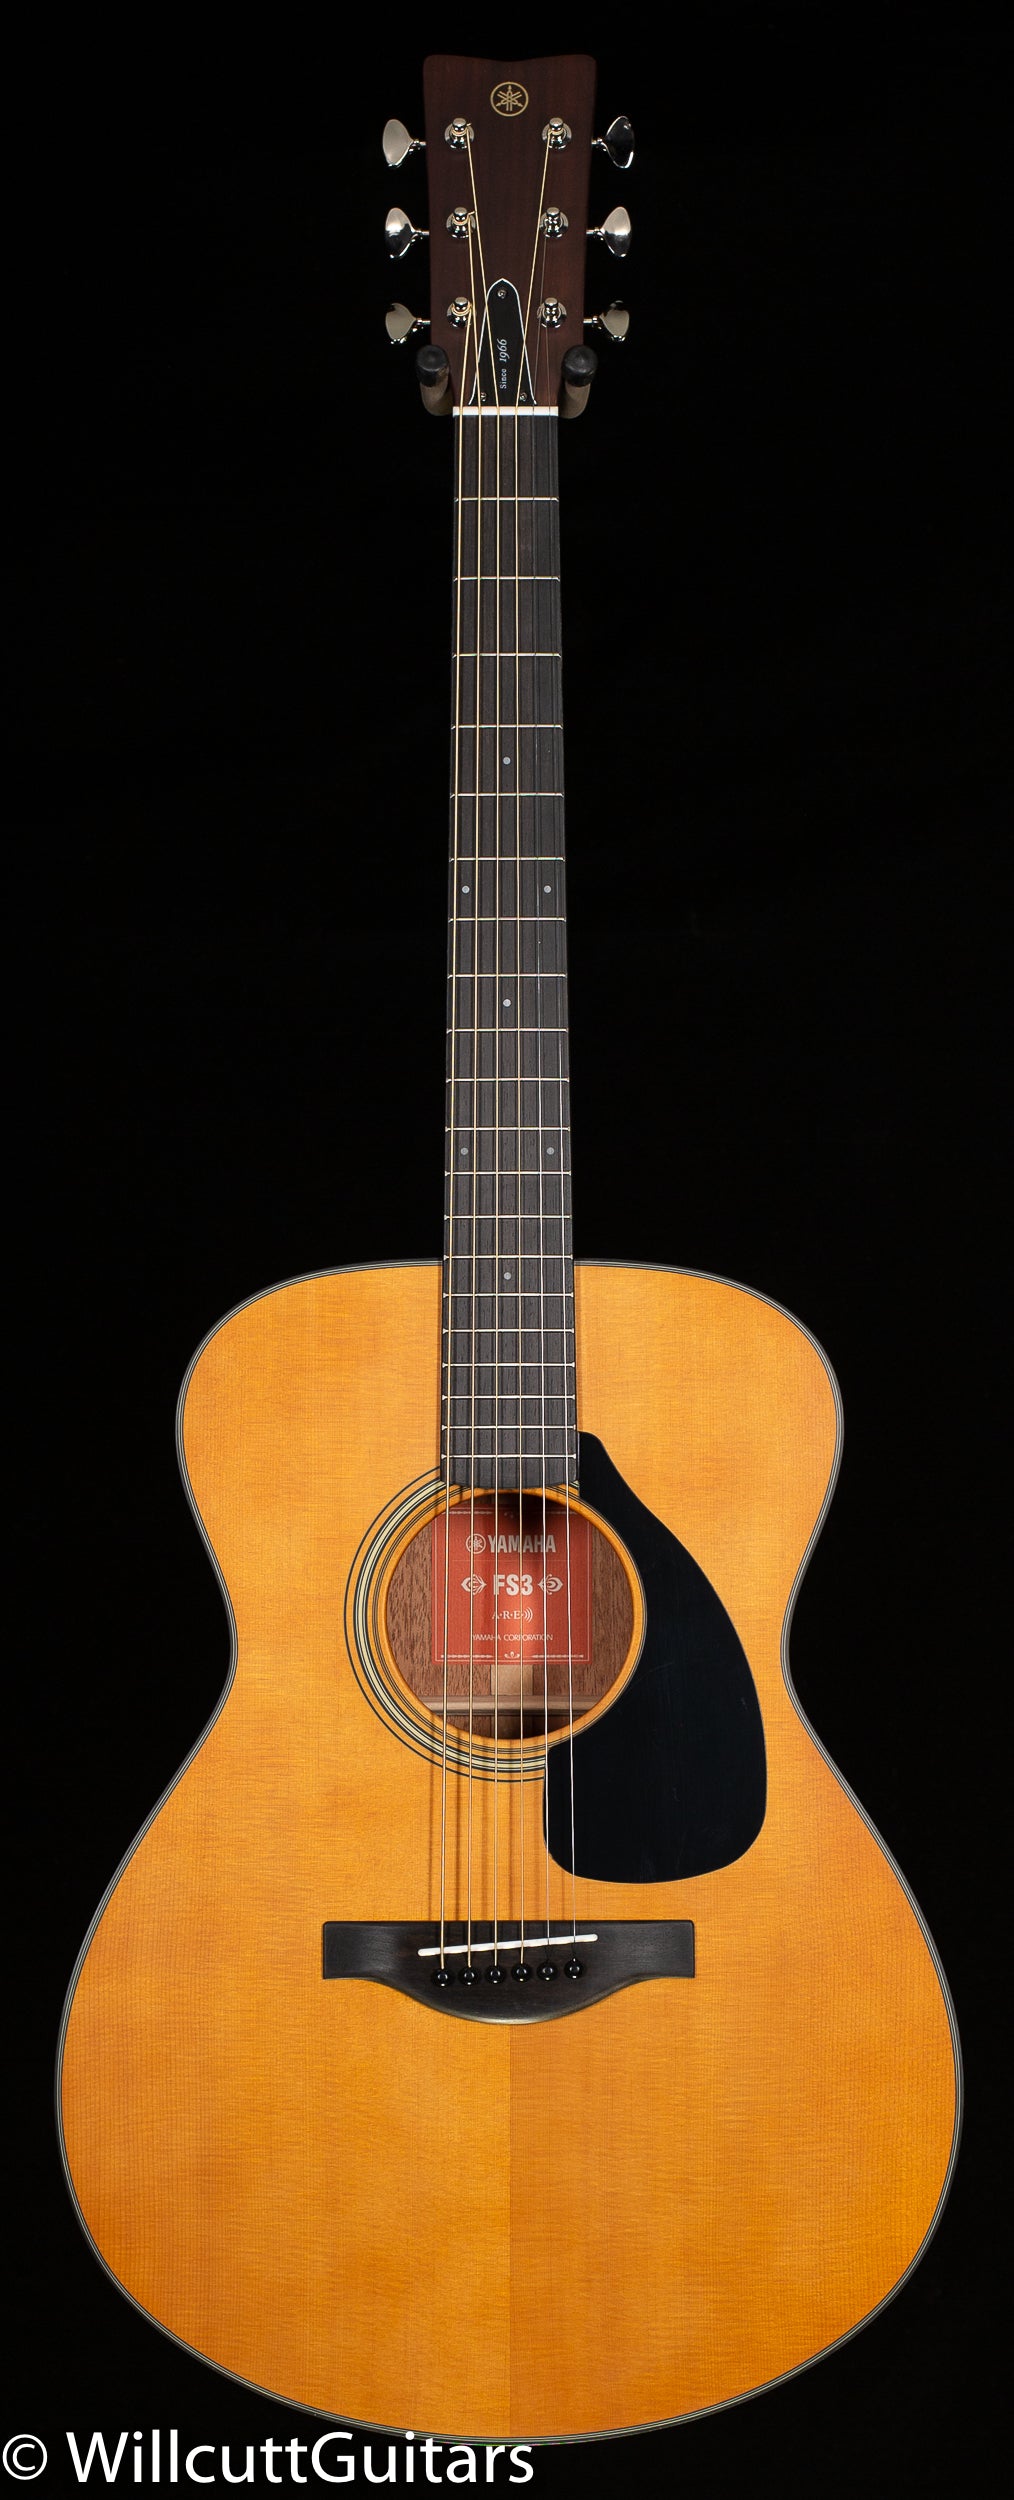 Yoghurt Arthur Conan Doyle Fange Yamaha FS3 RED LABEL SMALL BODY GUITAR (246) - Willcutt Guitars